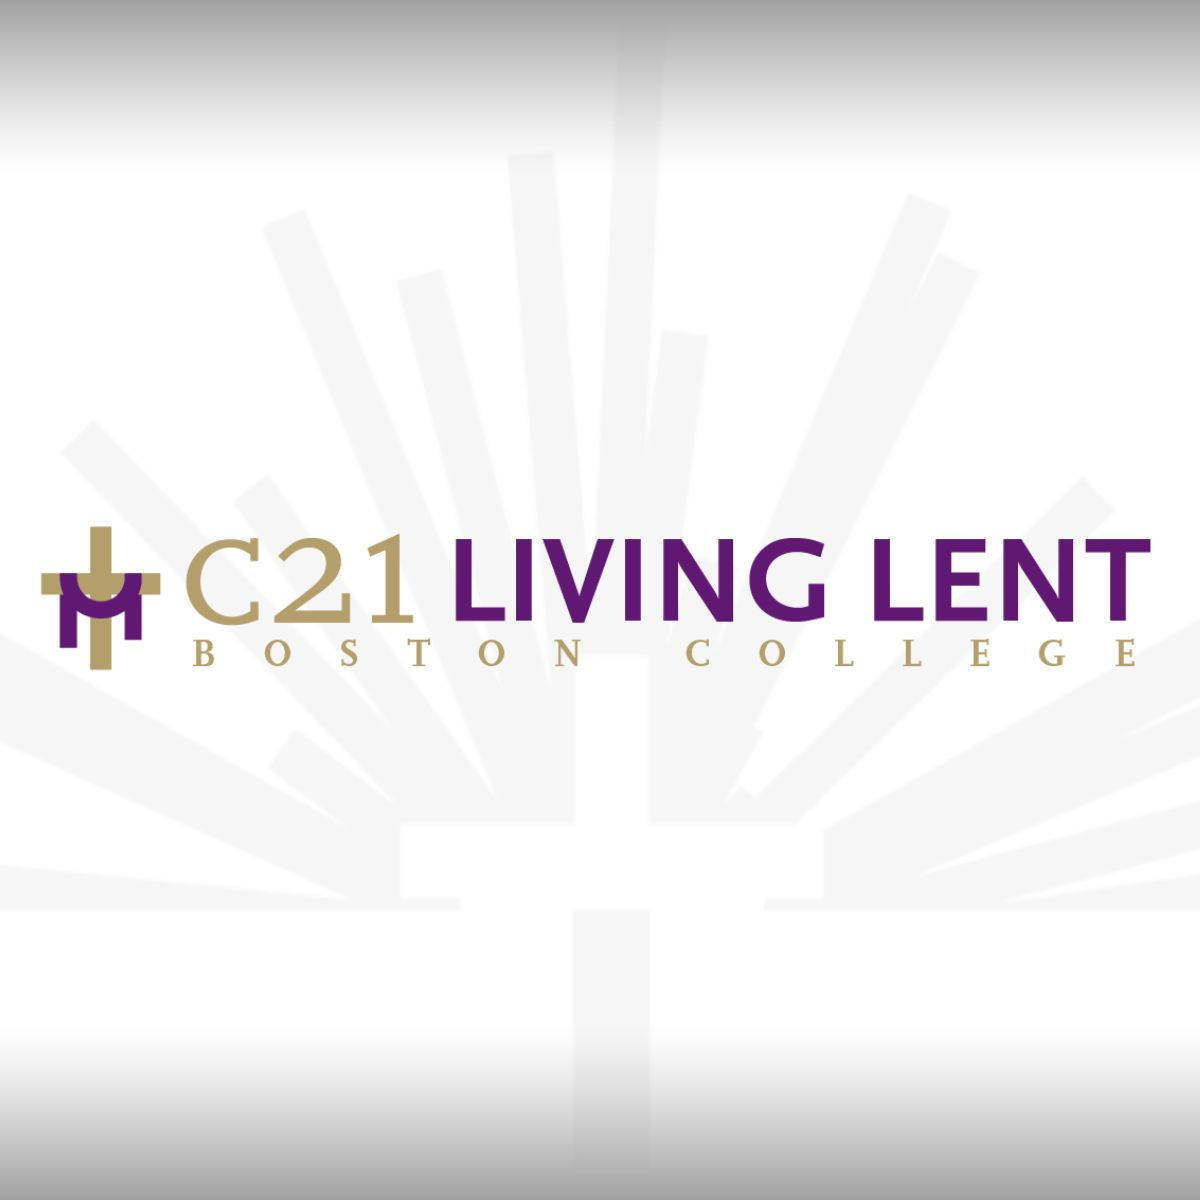 C21 Living Lent